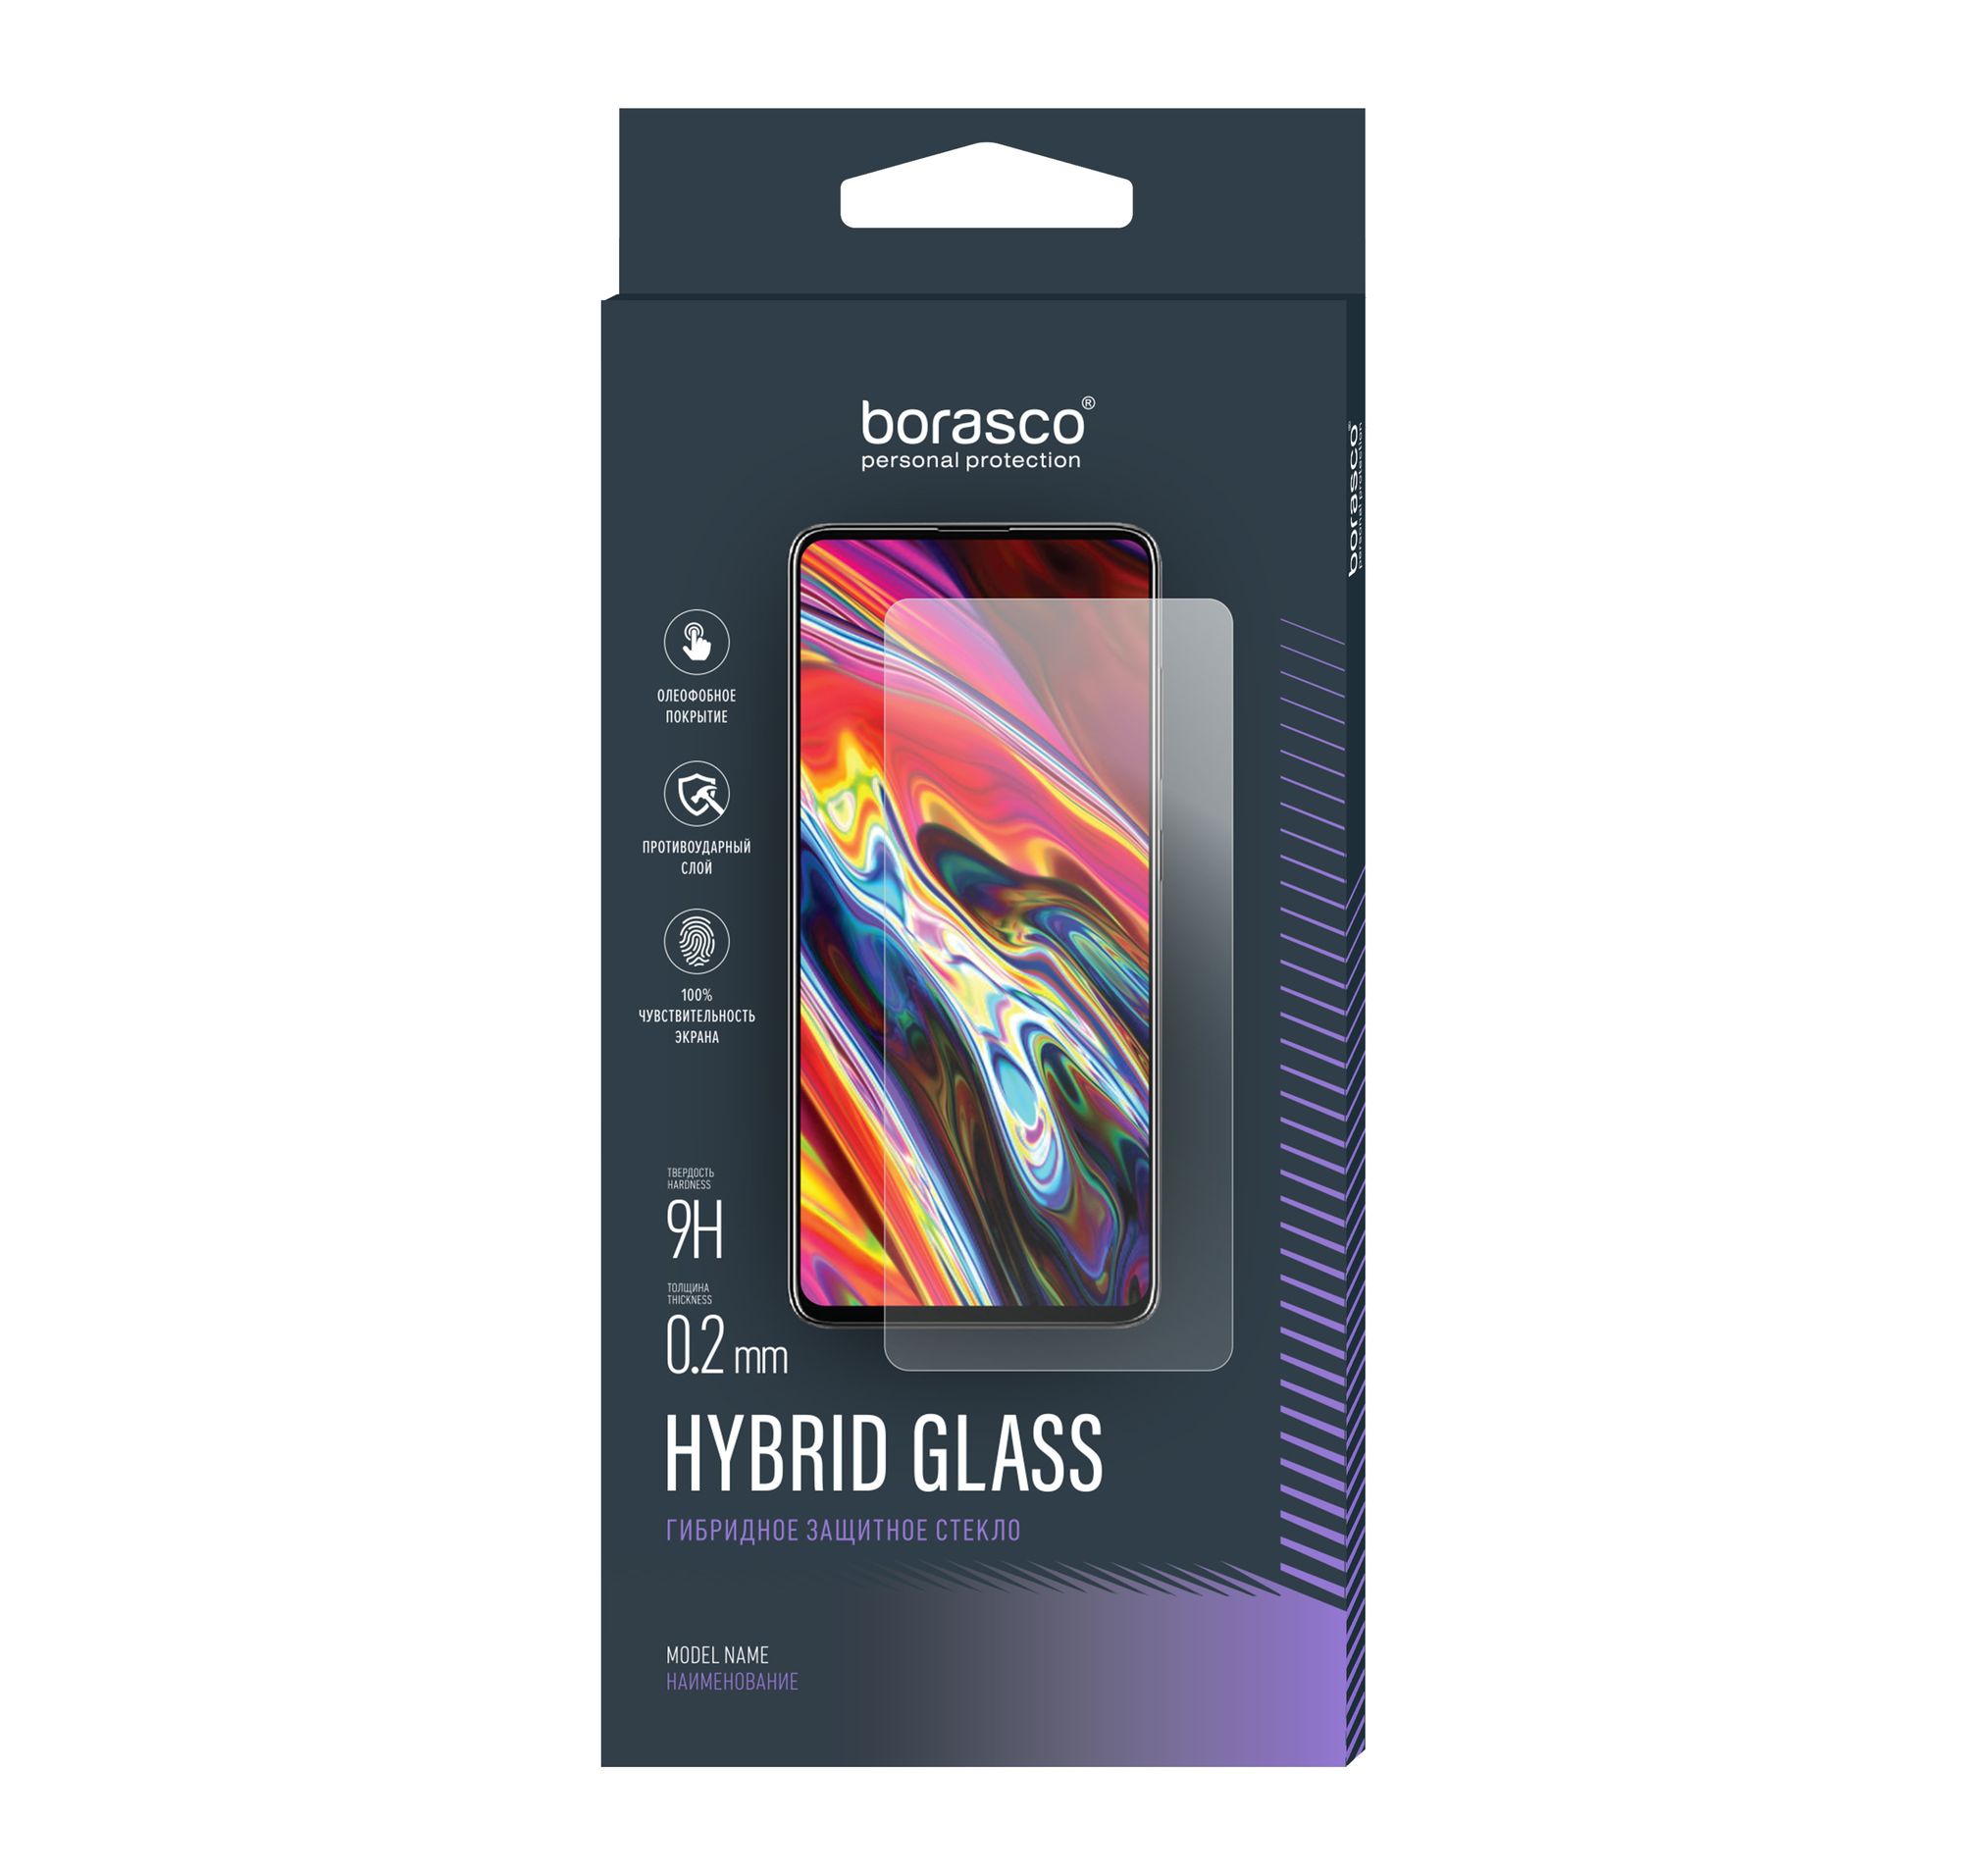 Стекло защитное Hybrid Glass VSP 0,26 мм для Sony Xperia Z5 Premium стекло защитное гибридное матовое krutoff для sony xperia z5 compact